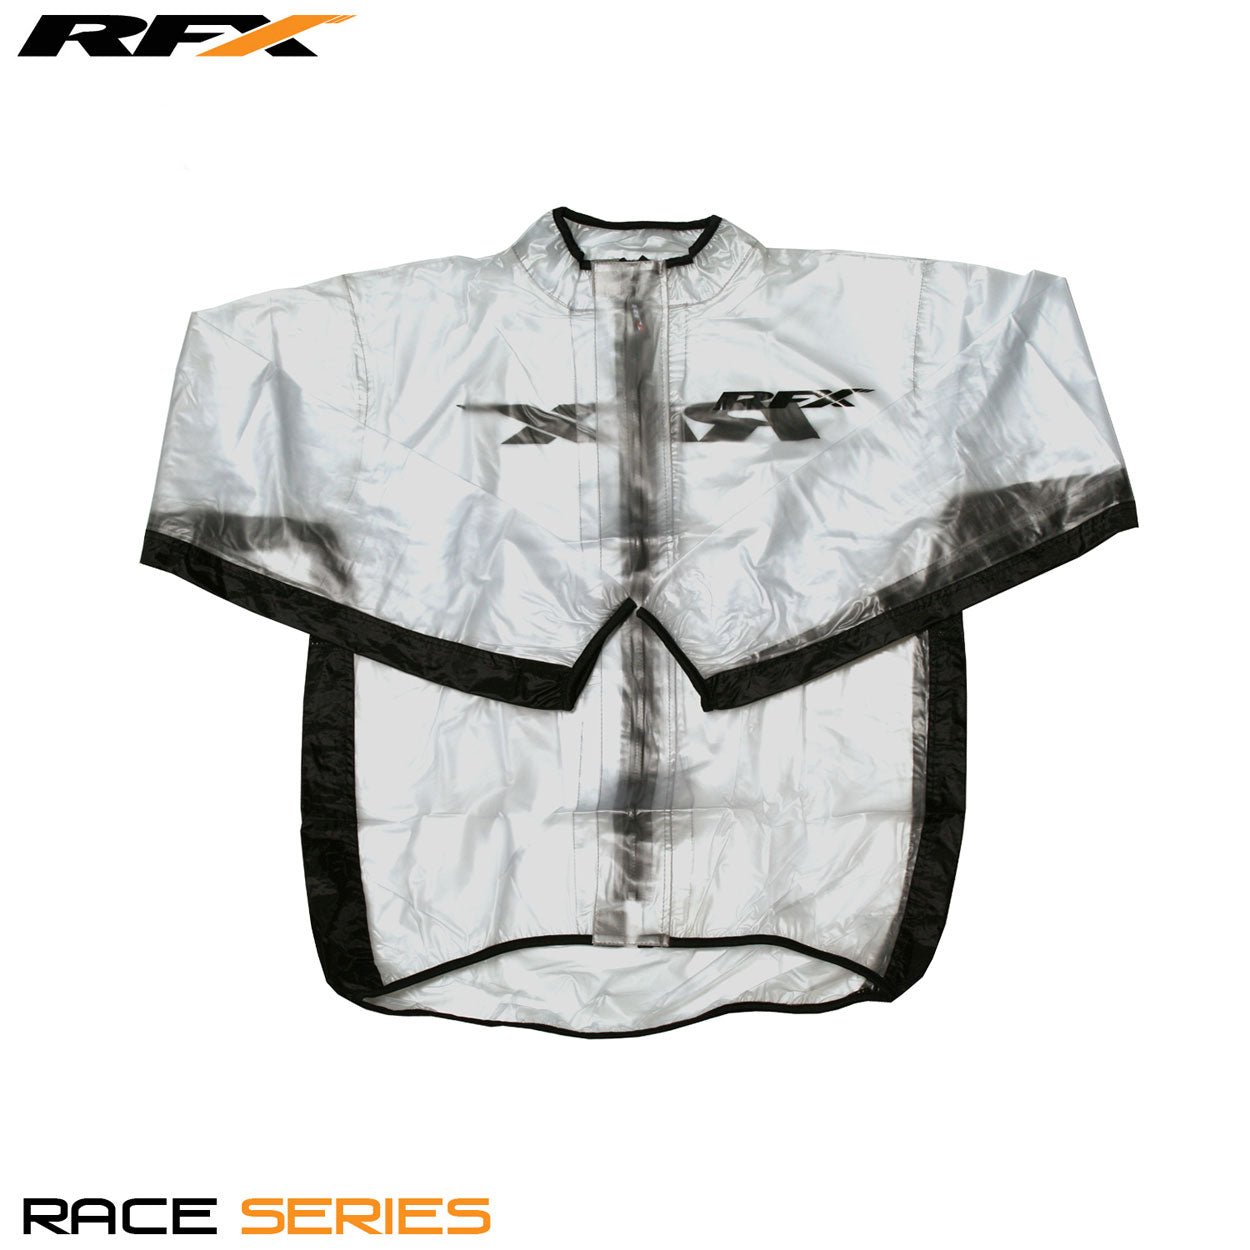 RFX Sport Wet Jacket (Clear/Black) Size Youth Medium (8-10) - Black - RFX